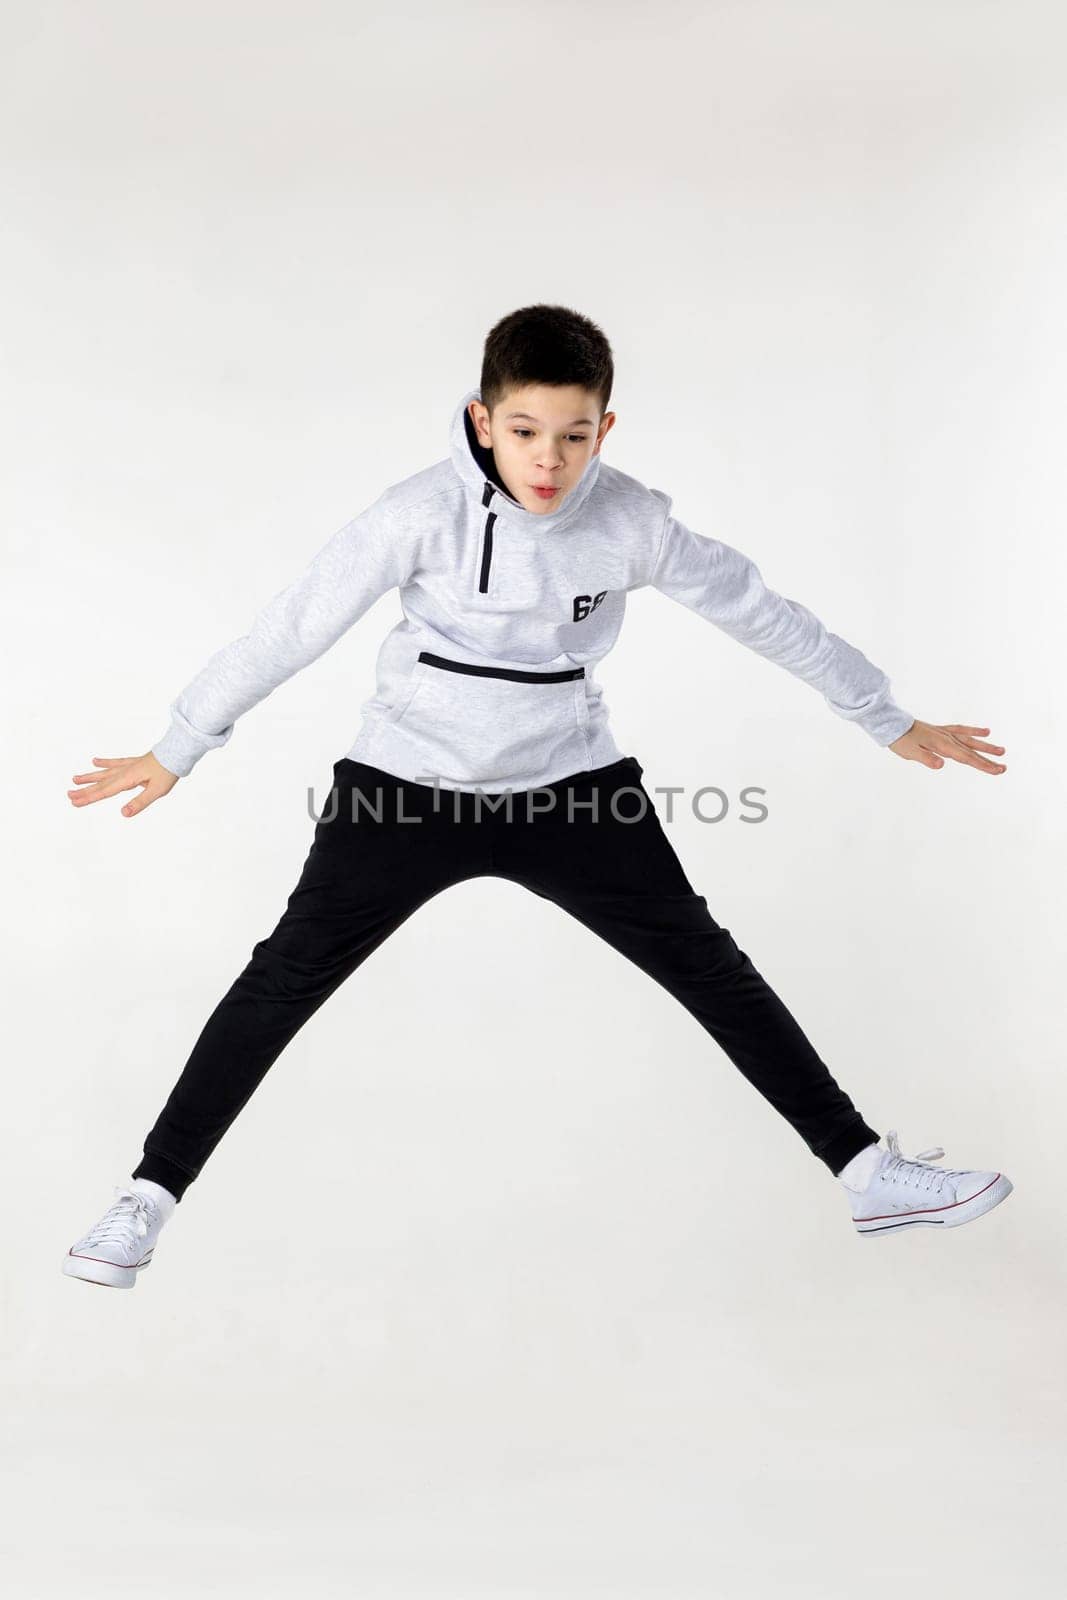 emotional little boy jumping on white studio background.